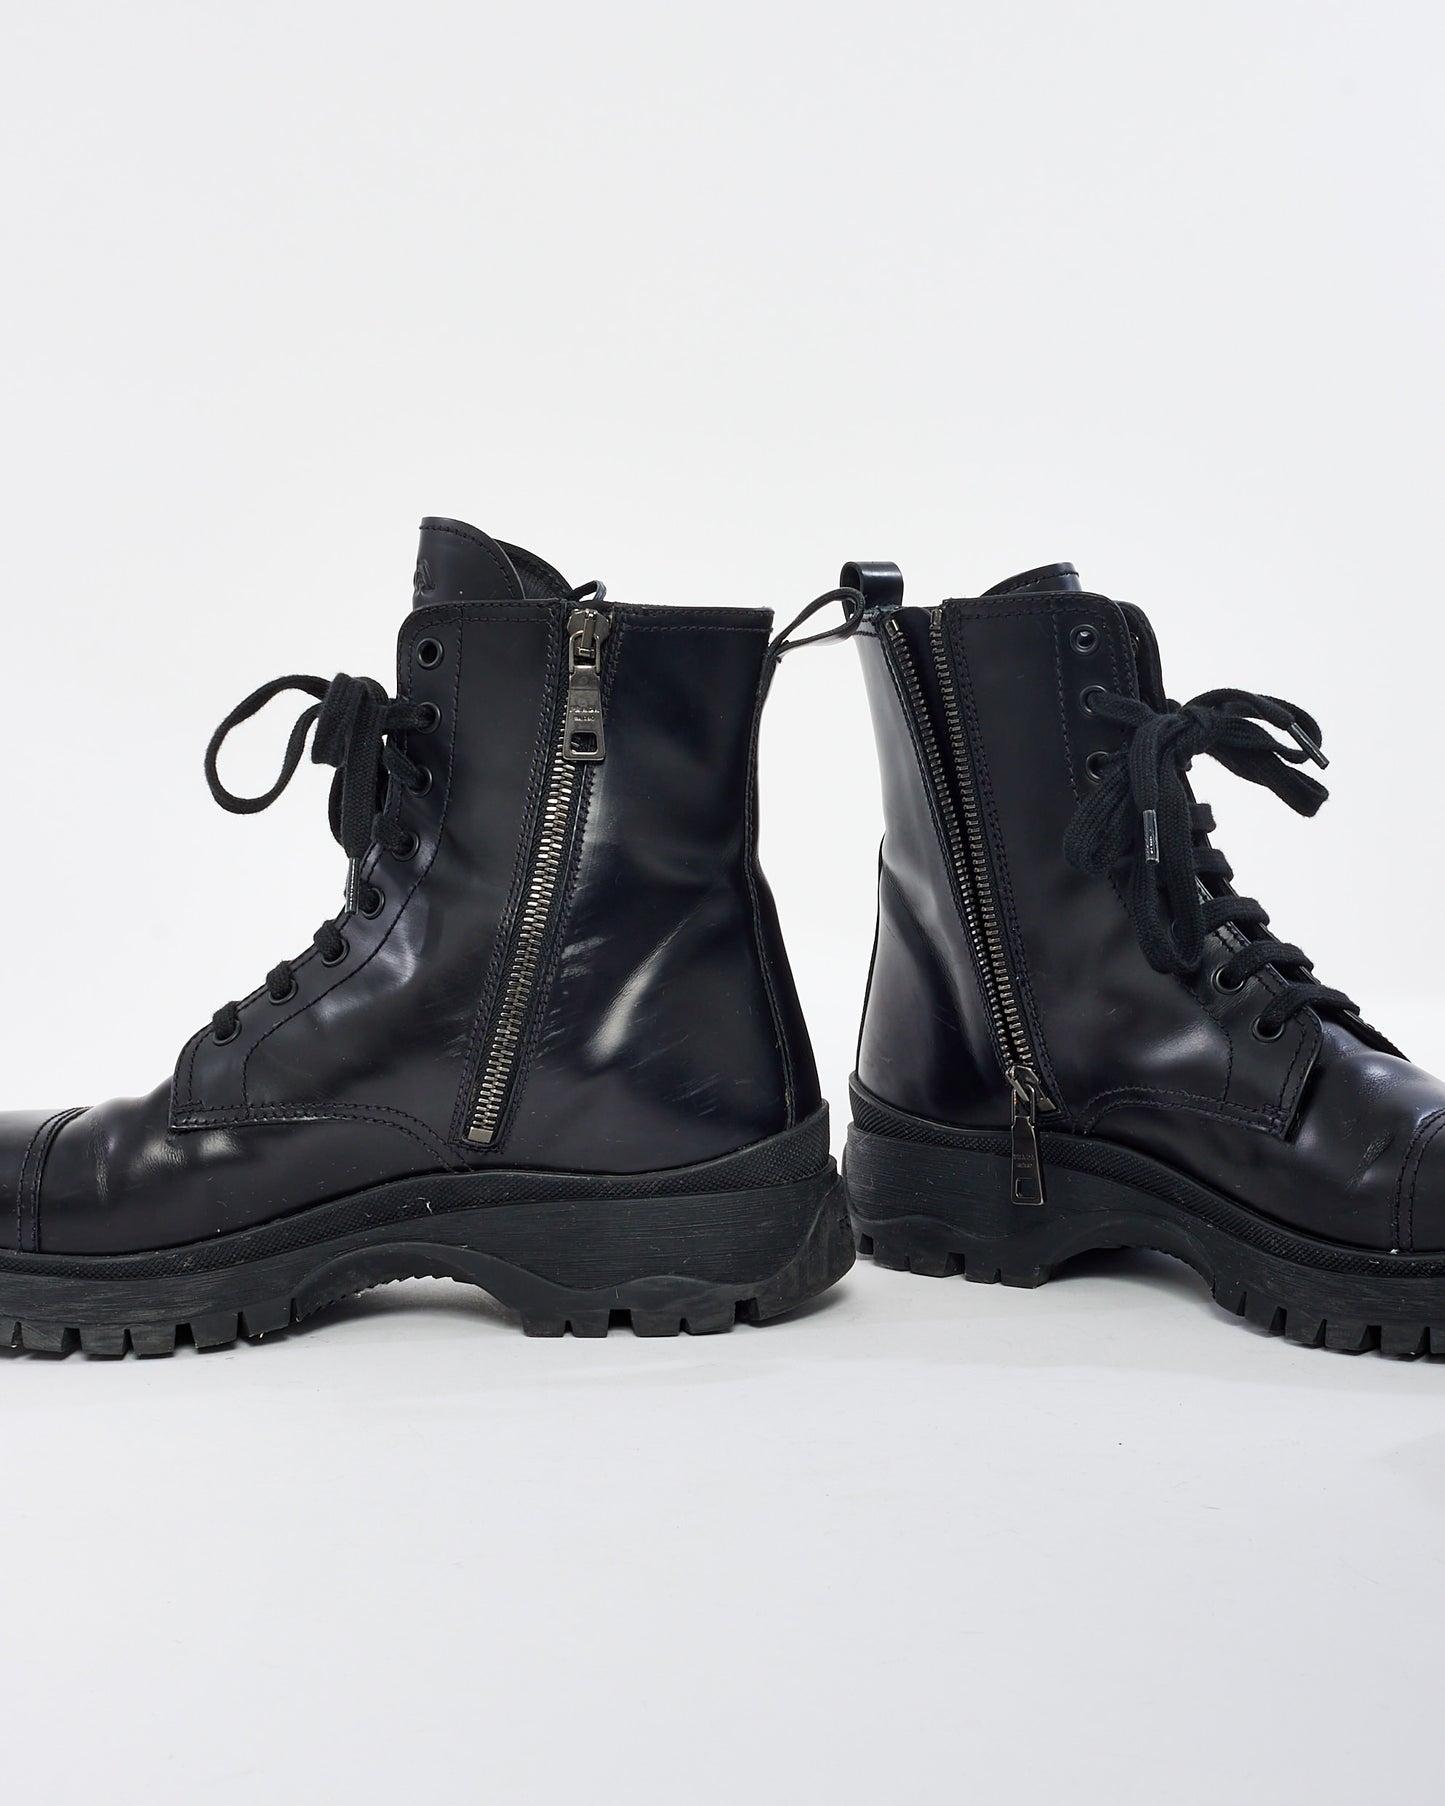 Prada Black Leather Combat Boots - 39